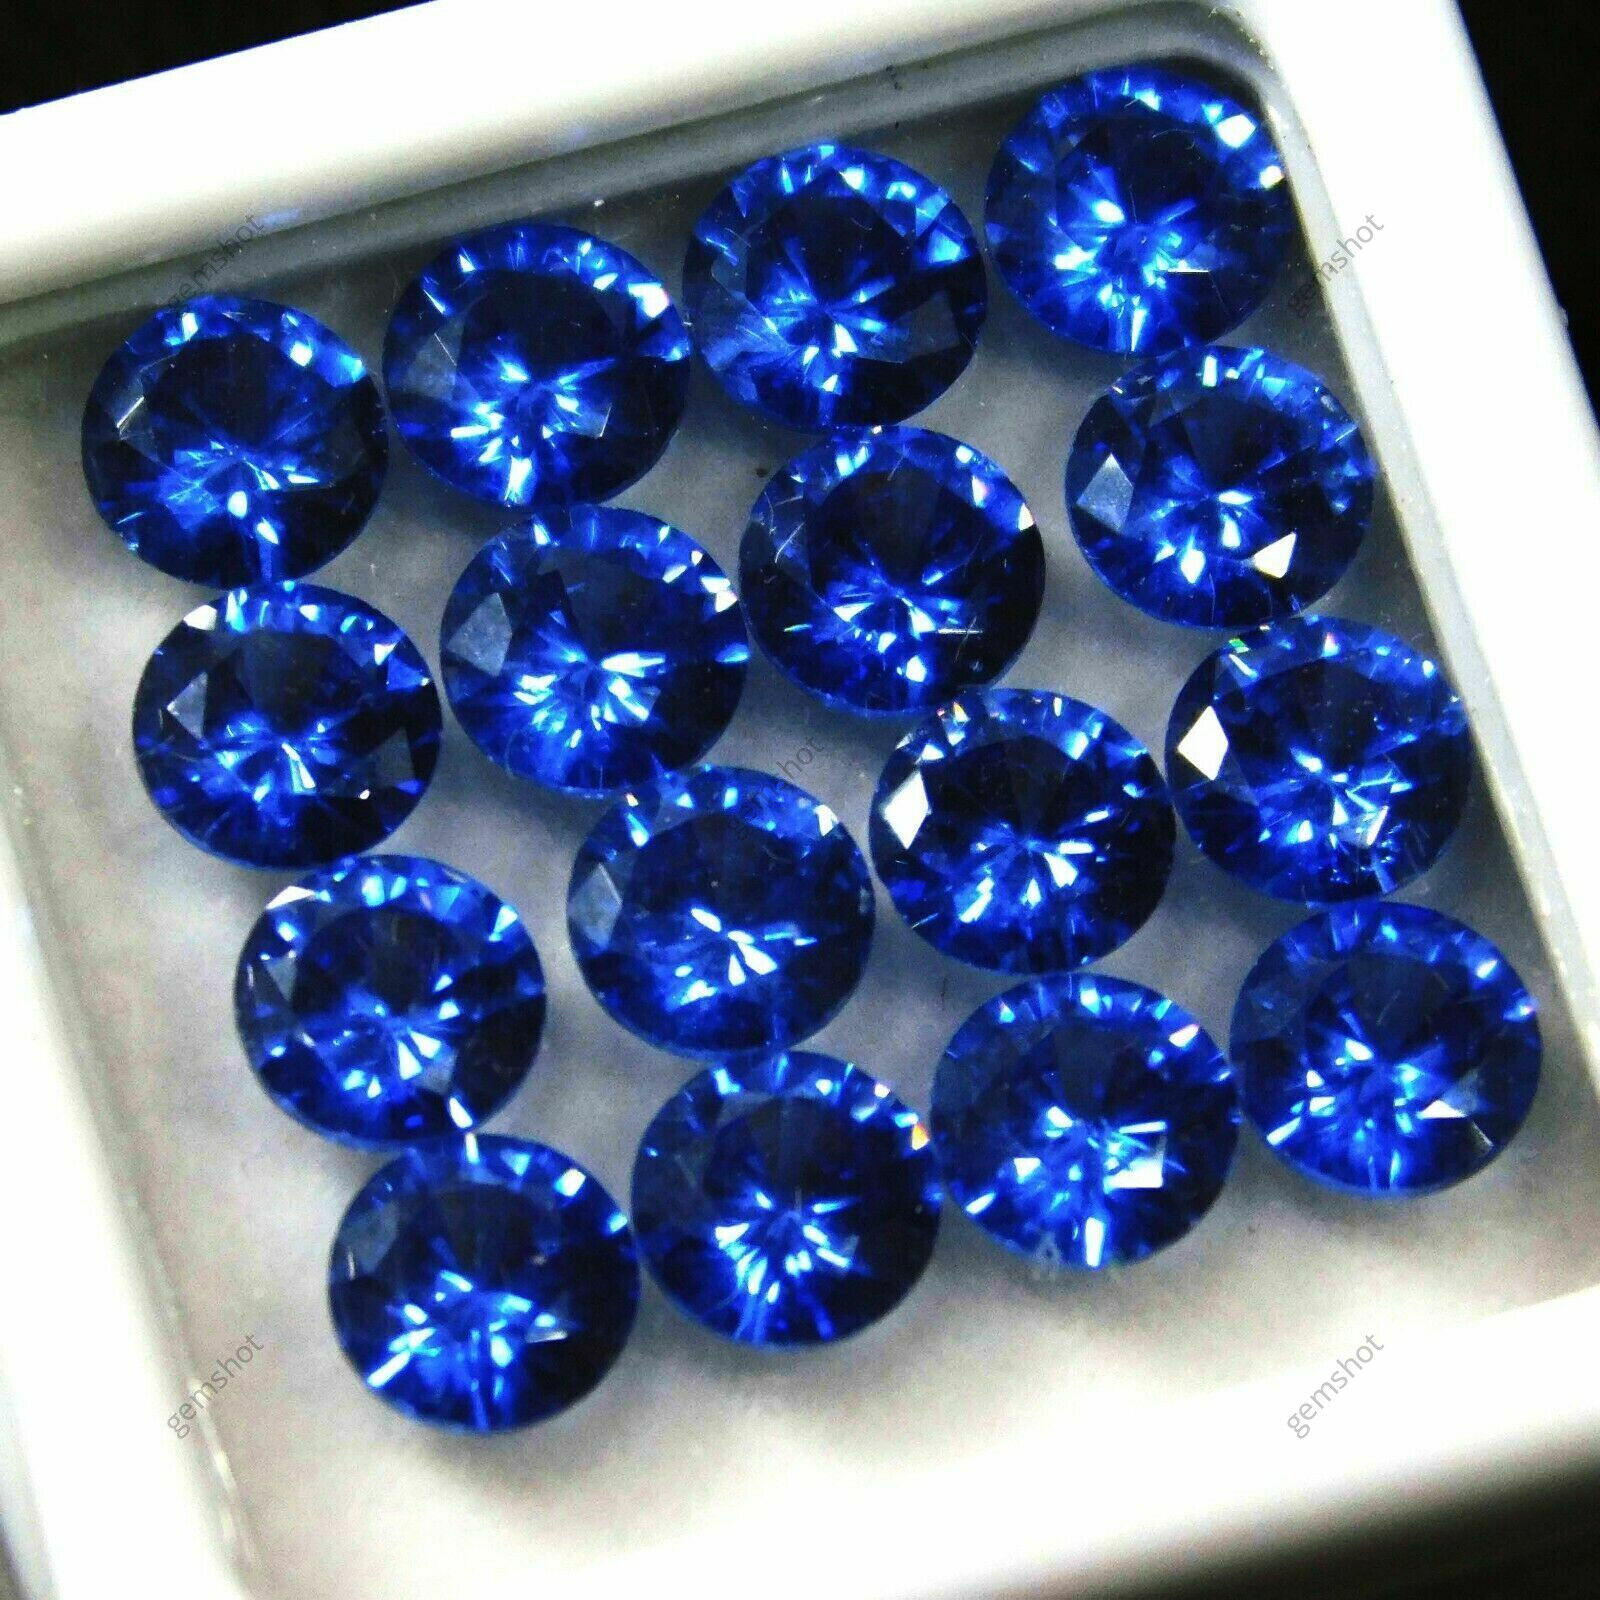 10 PCS Natural Blue Sapphire Round Cut Gemstone CERTIFIED Lot 5 MM